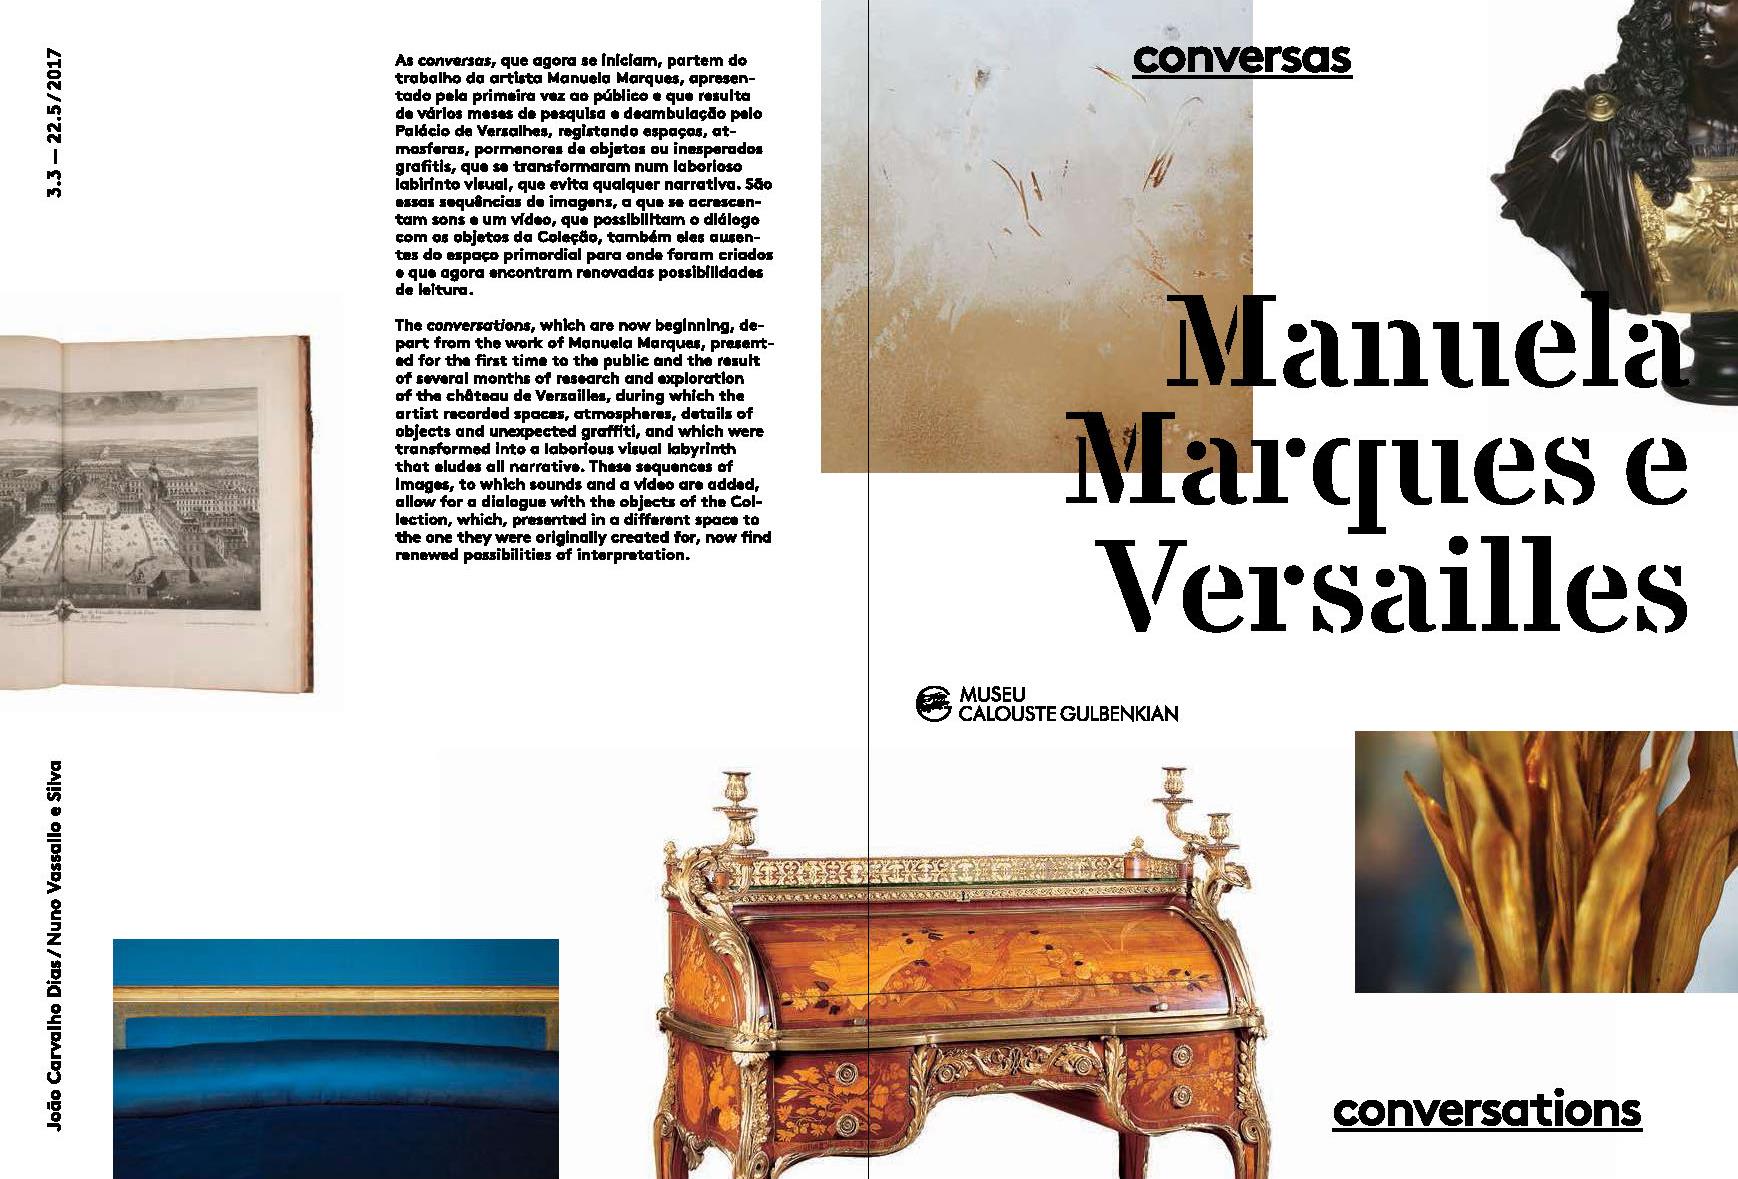 ID81195_Manuela Marques e Versailles_caderno_capa